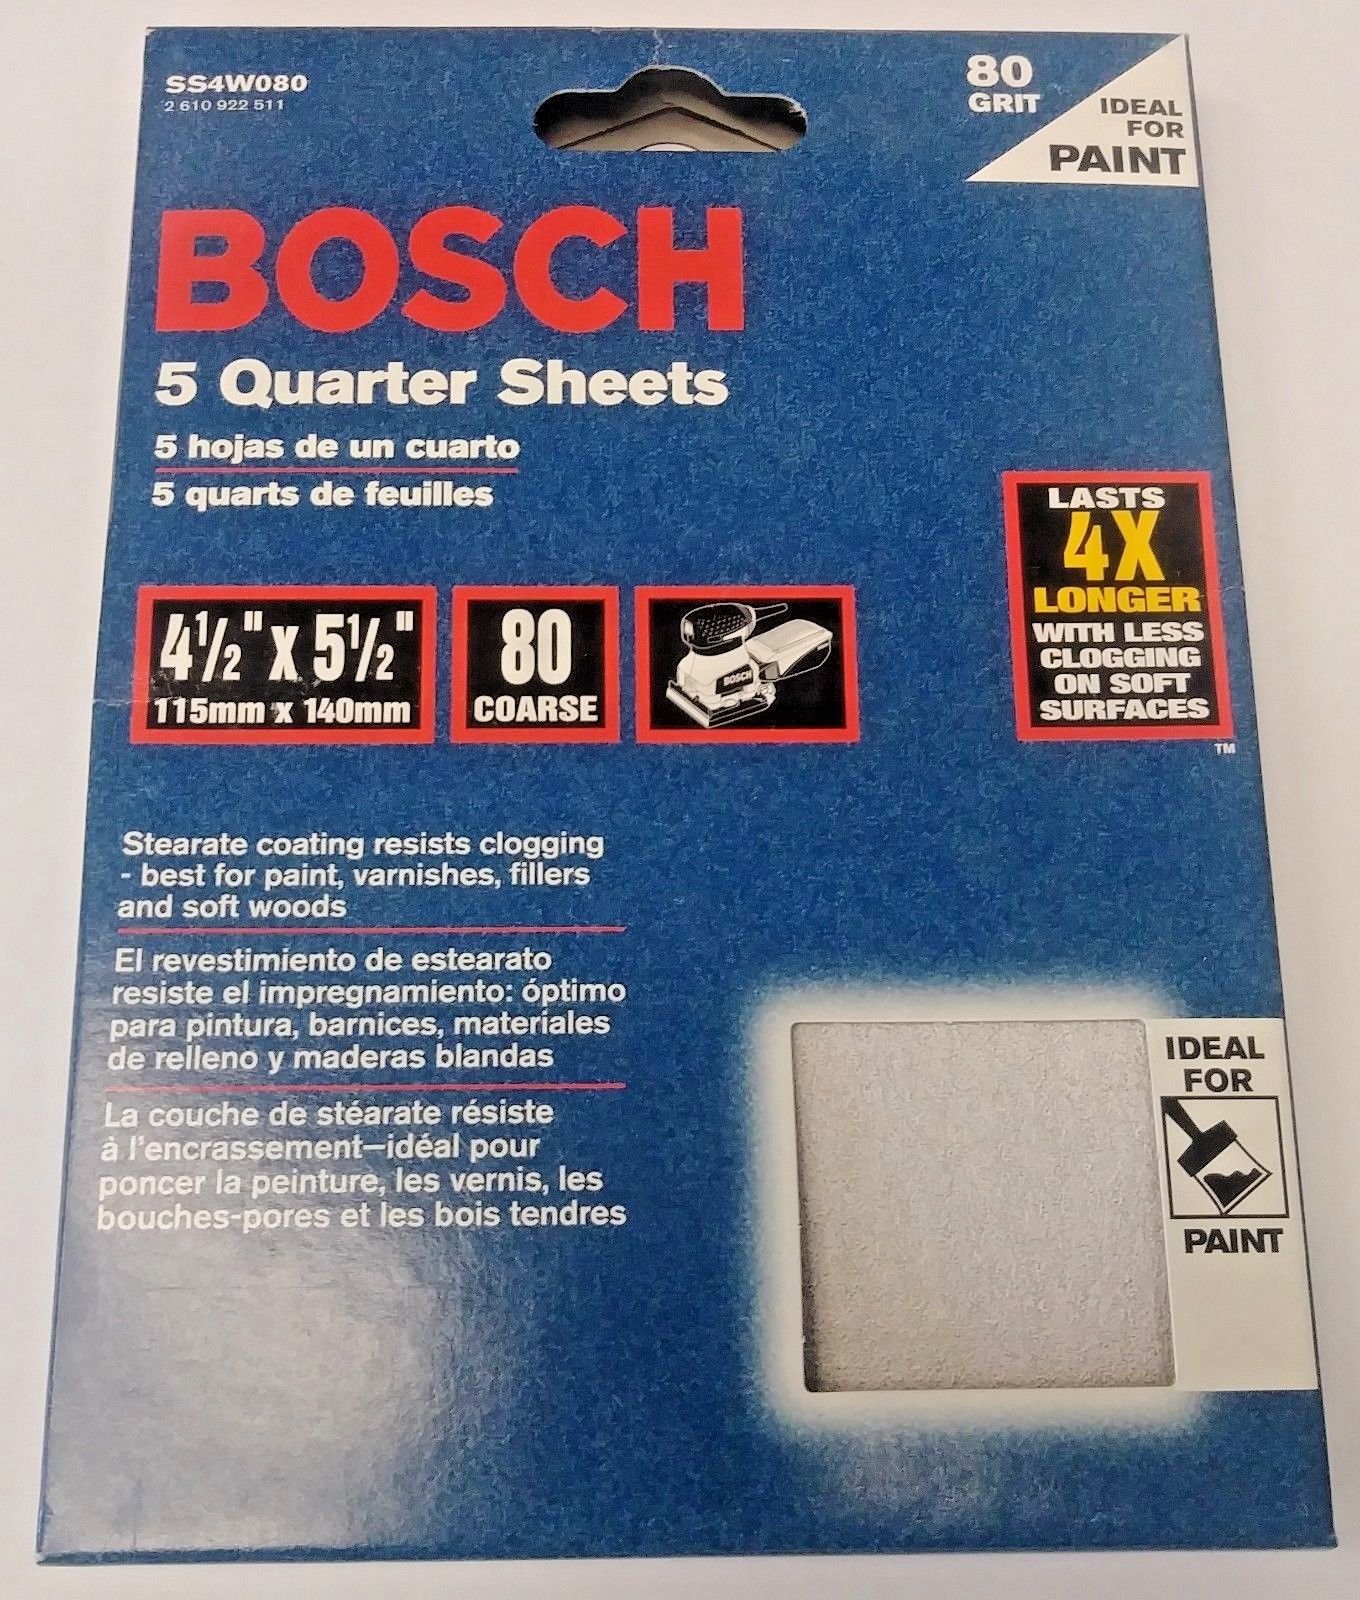 Bosch SS4W080 5 Piece 80 Grit 4-1/2" x 5-1/2" General Purpose Sanding Sheets